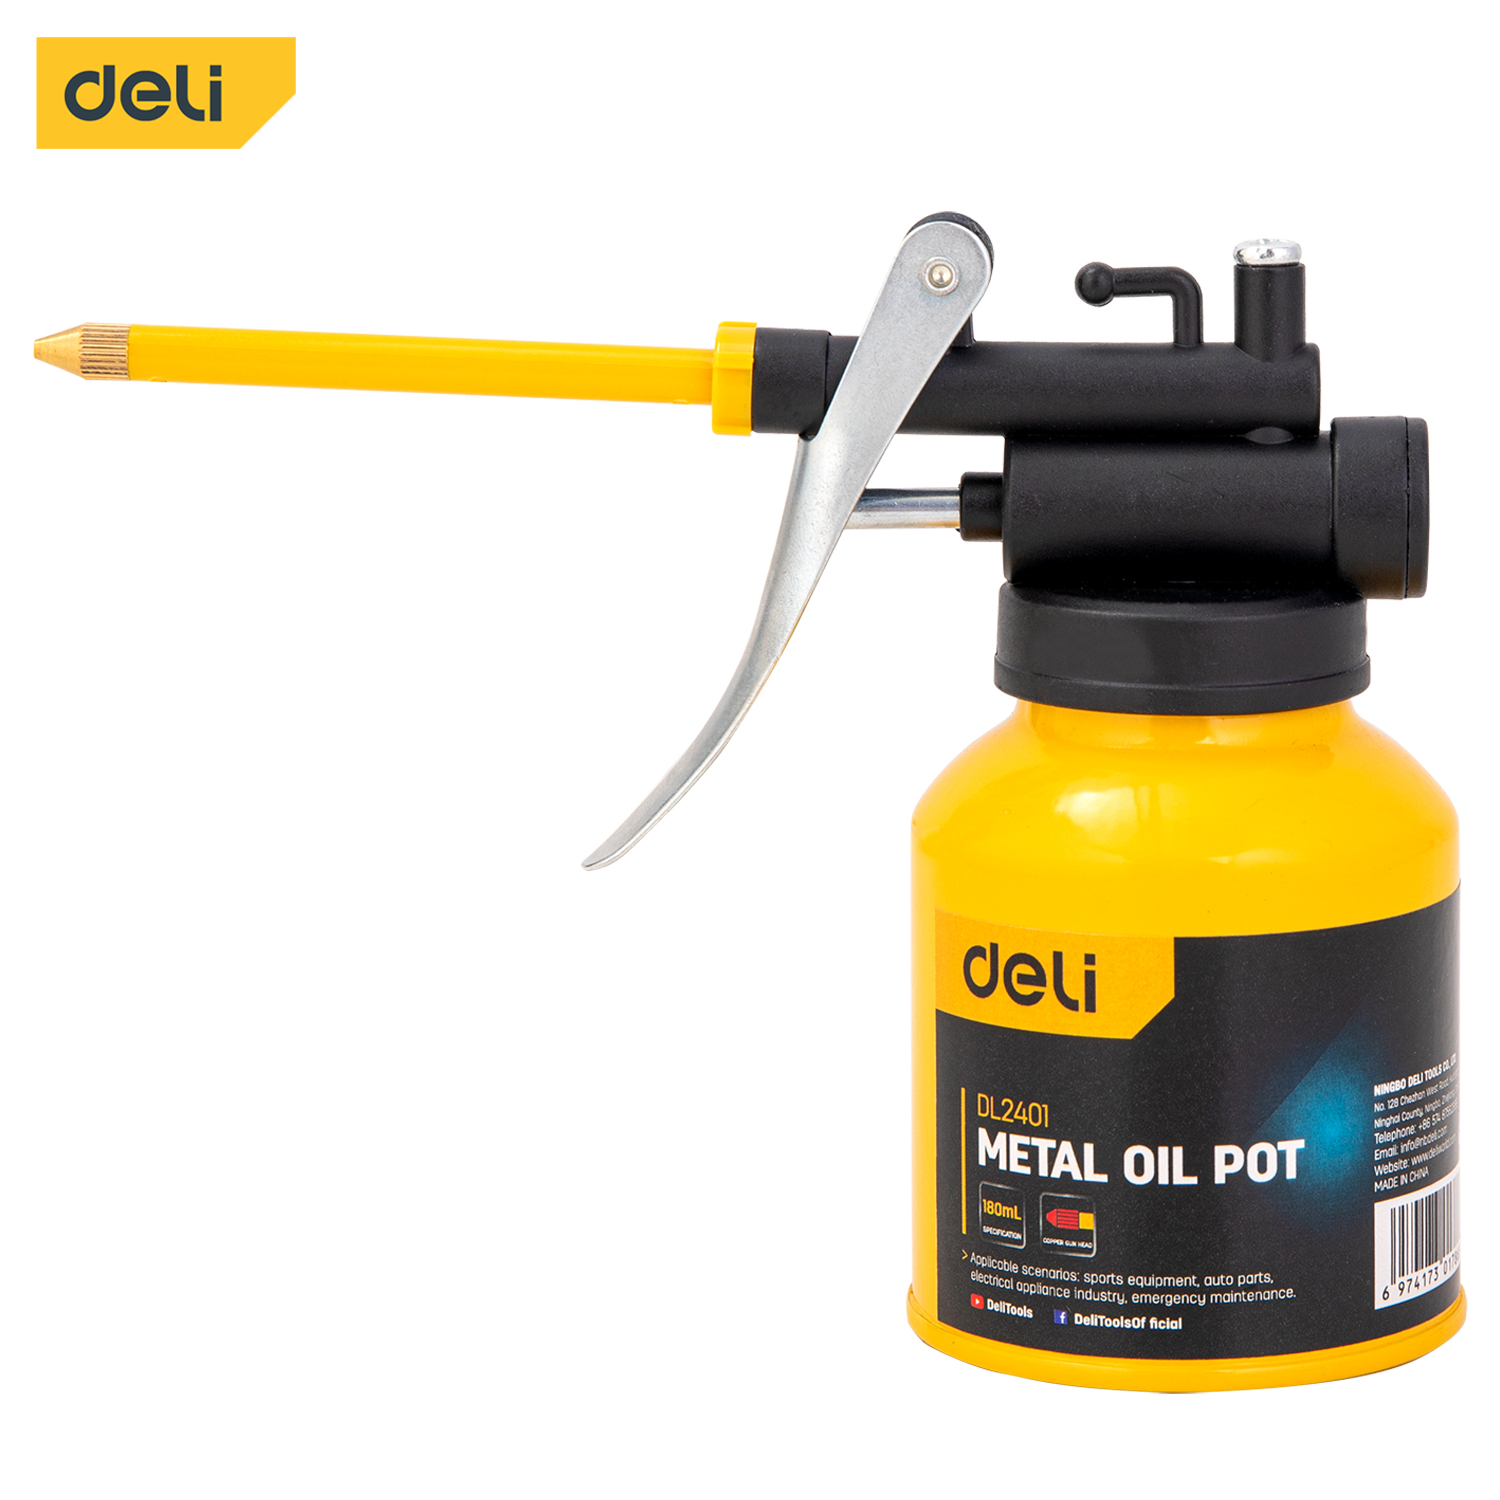 Deli-EDL2401 Metal Oil Can